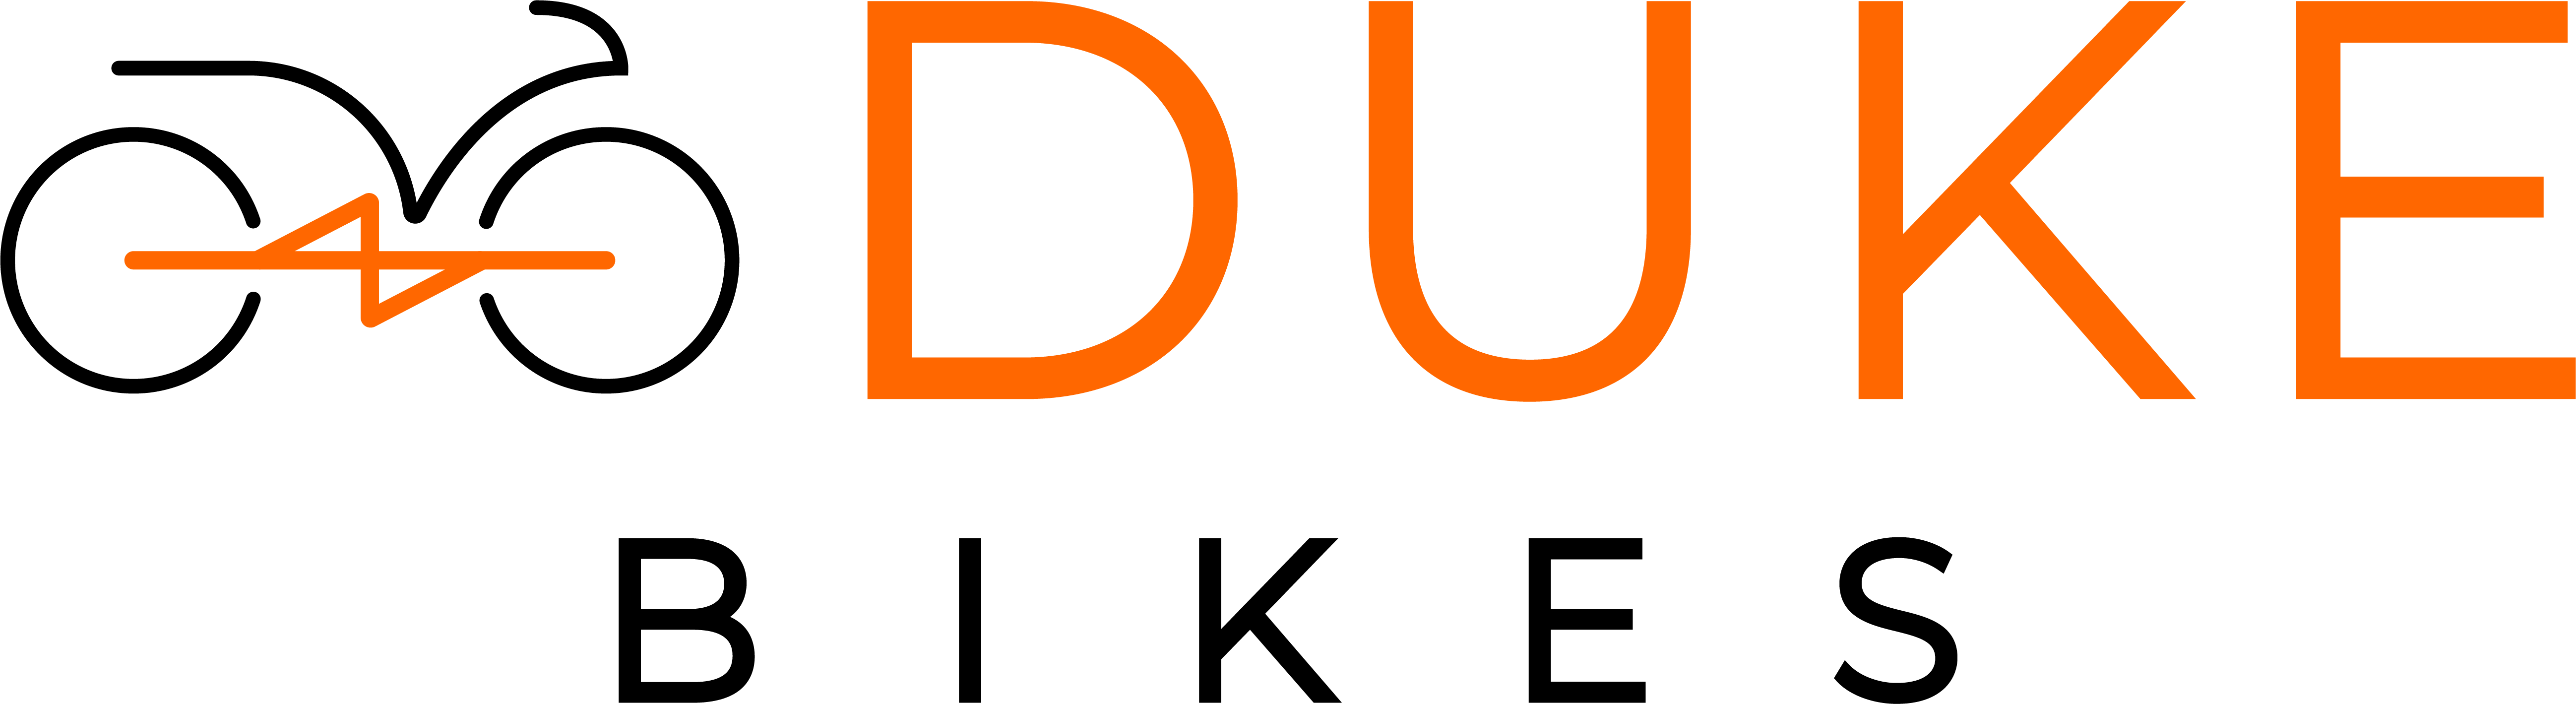 Duke 390 Wallpaper Projects :: Photos, videos, logos, illustrations and  branding :: Behance